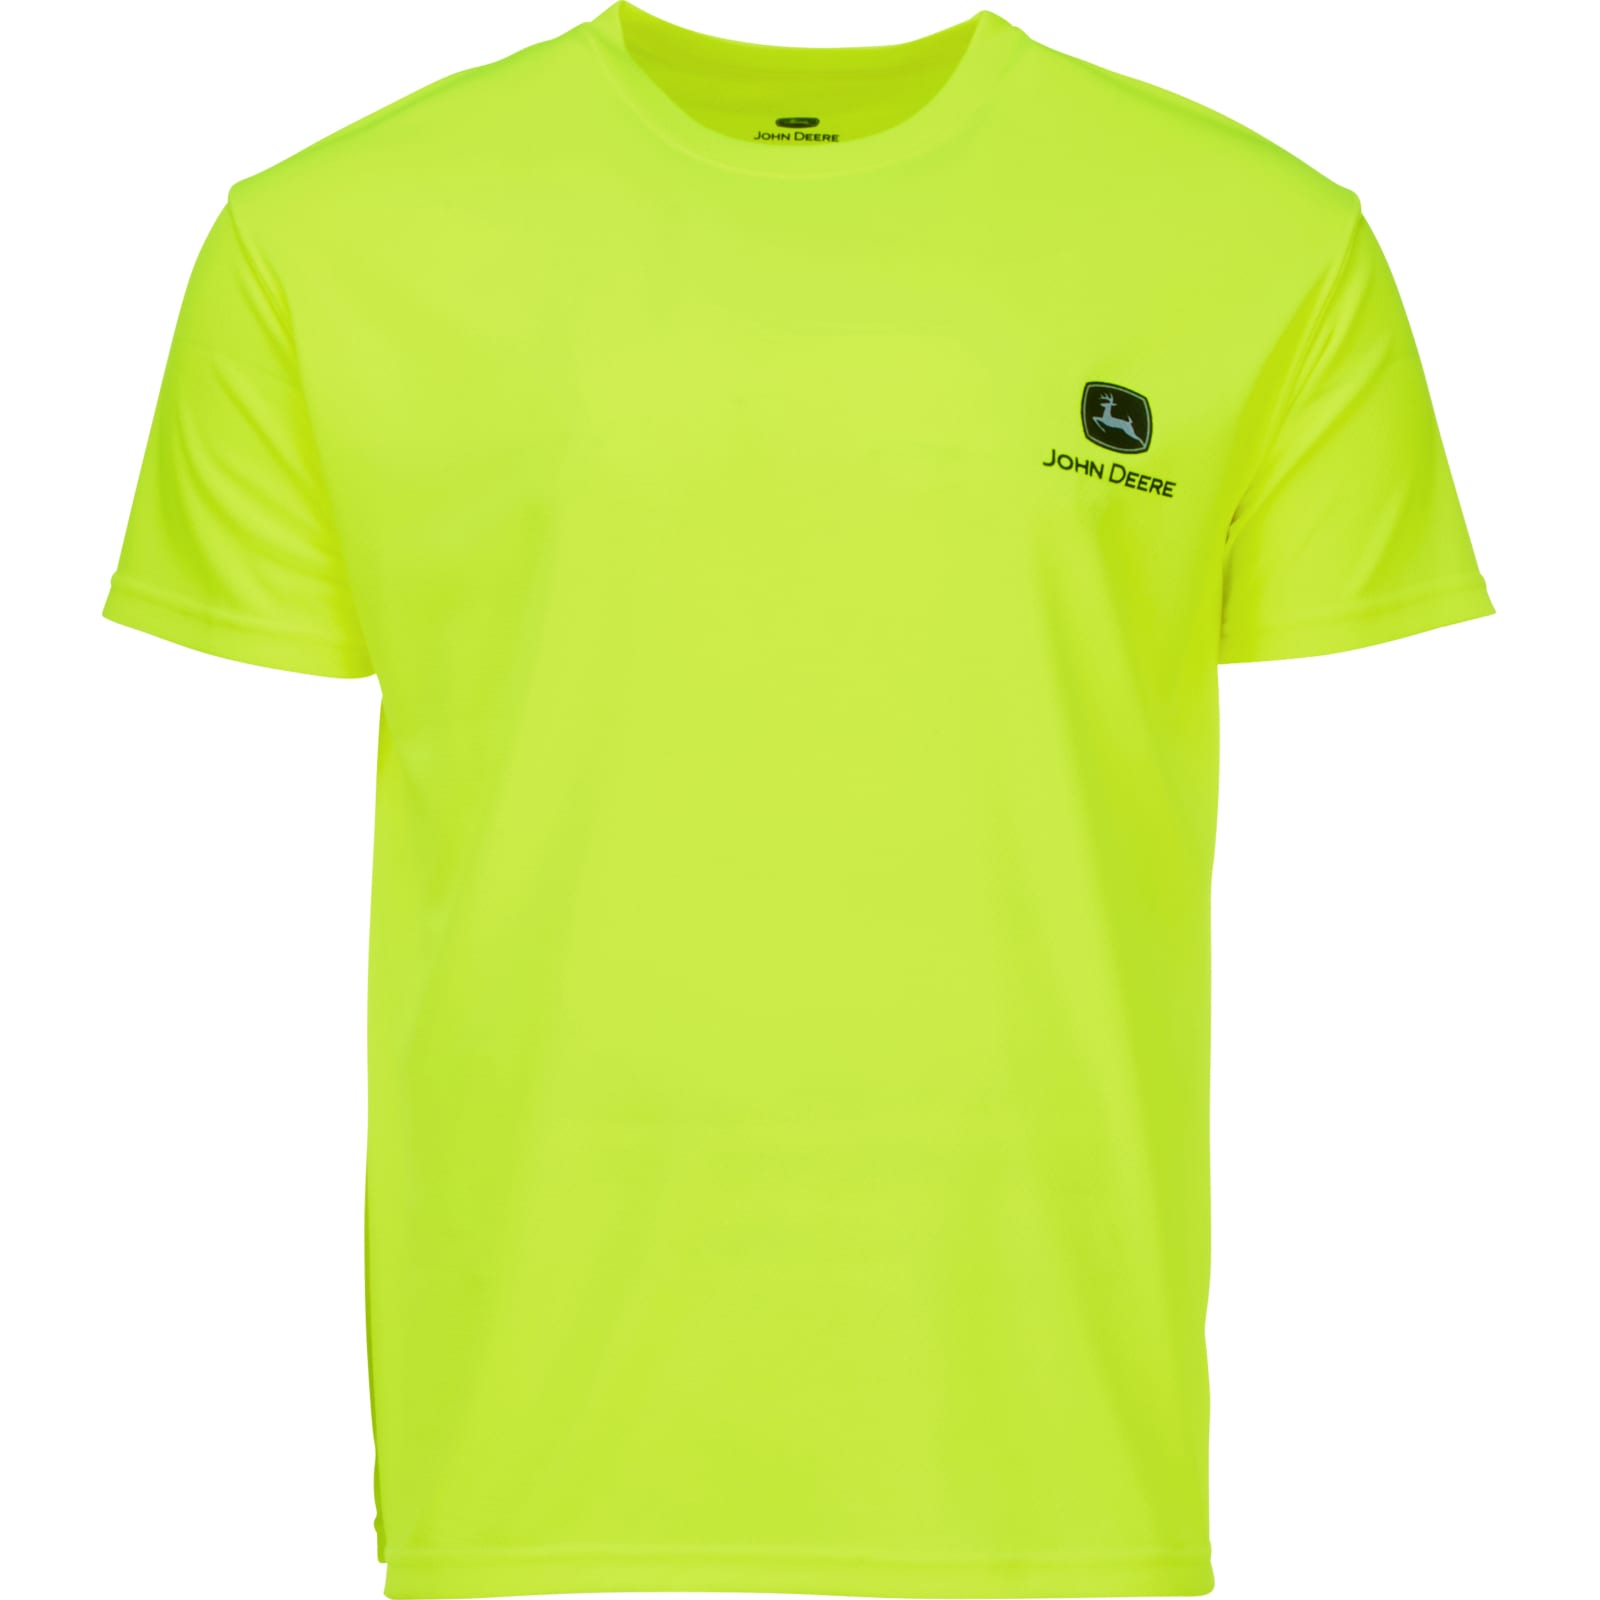 Performance Yellow Hi-Vis Logo Crew Neck Short Sleeve Polyester T- Shirt by Deere at Fleet Farm